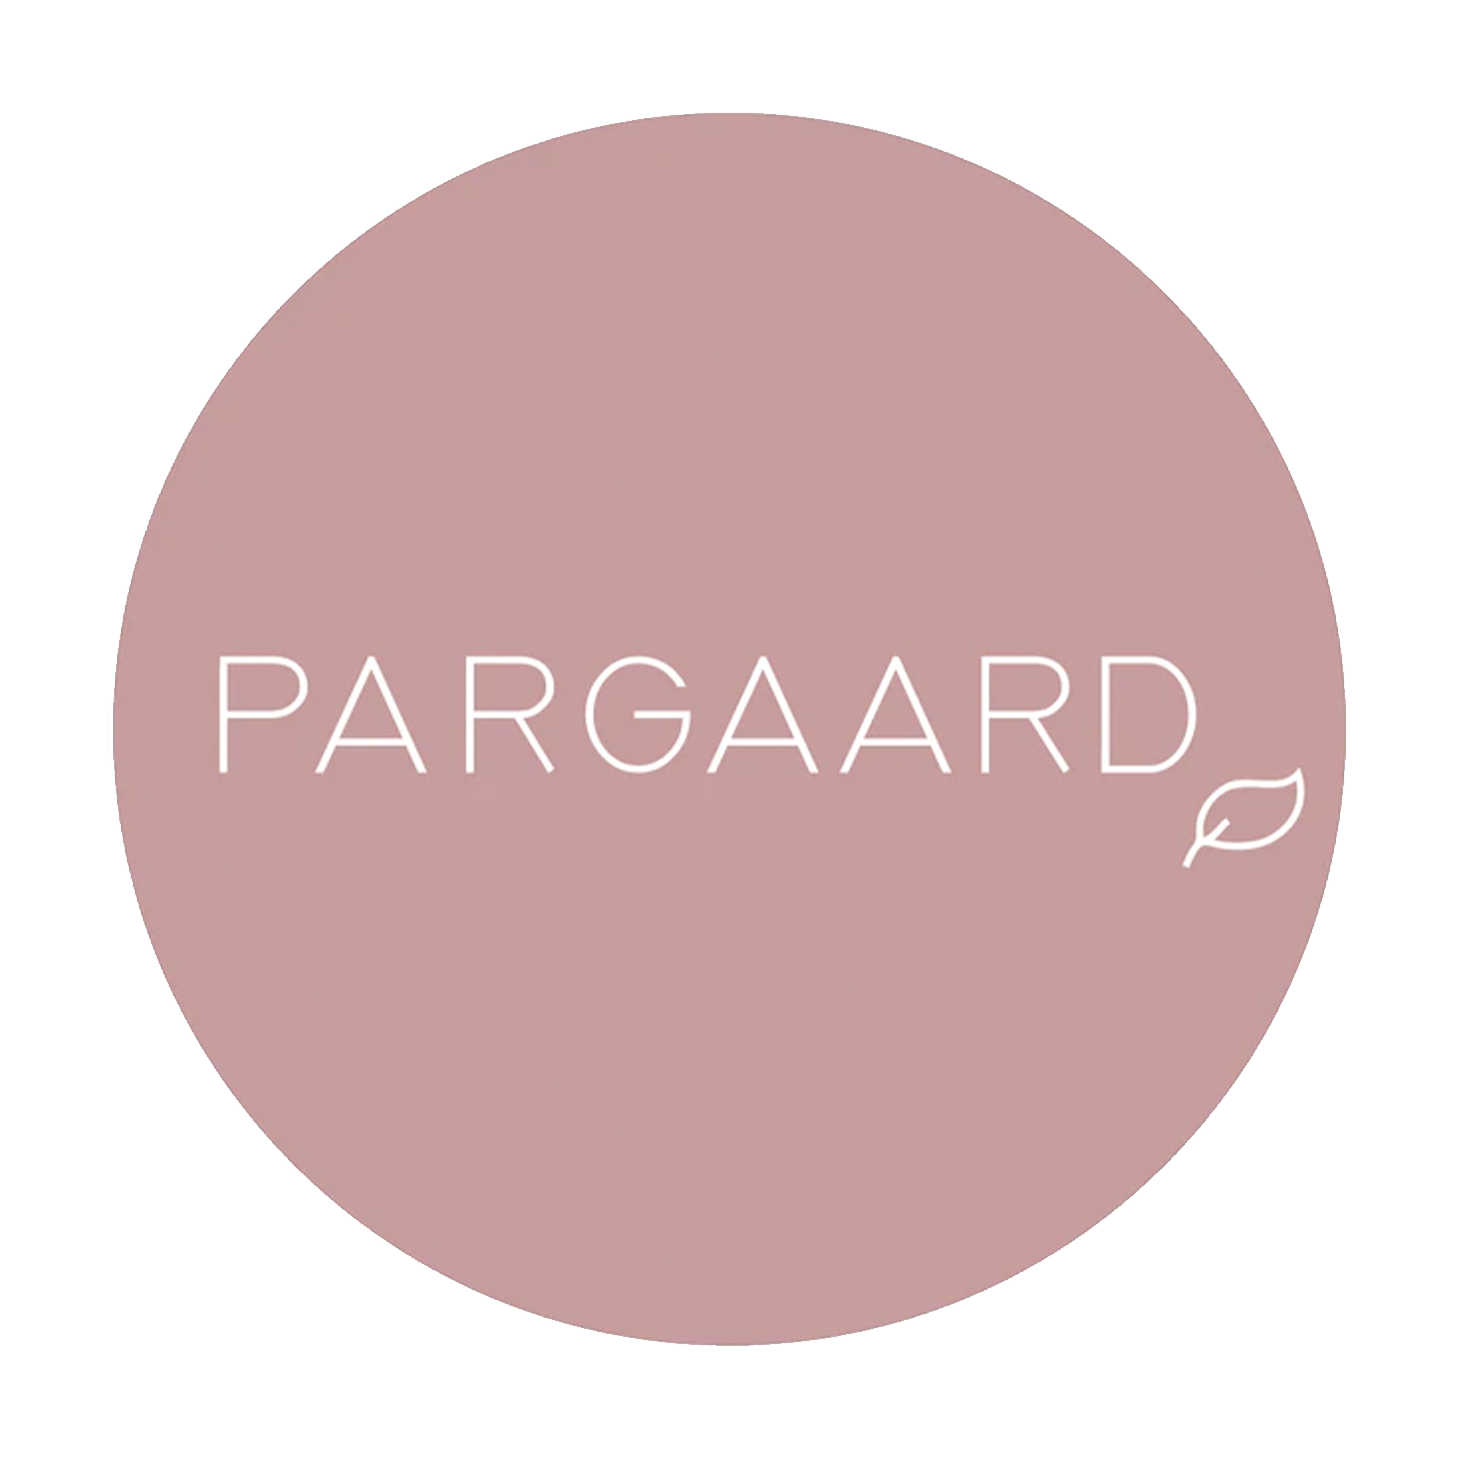 Pargaard logo